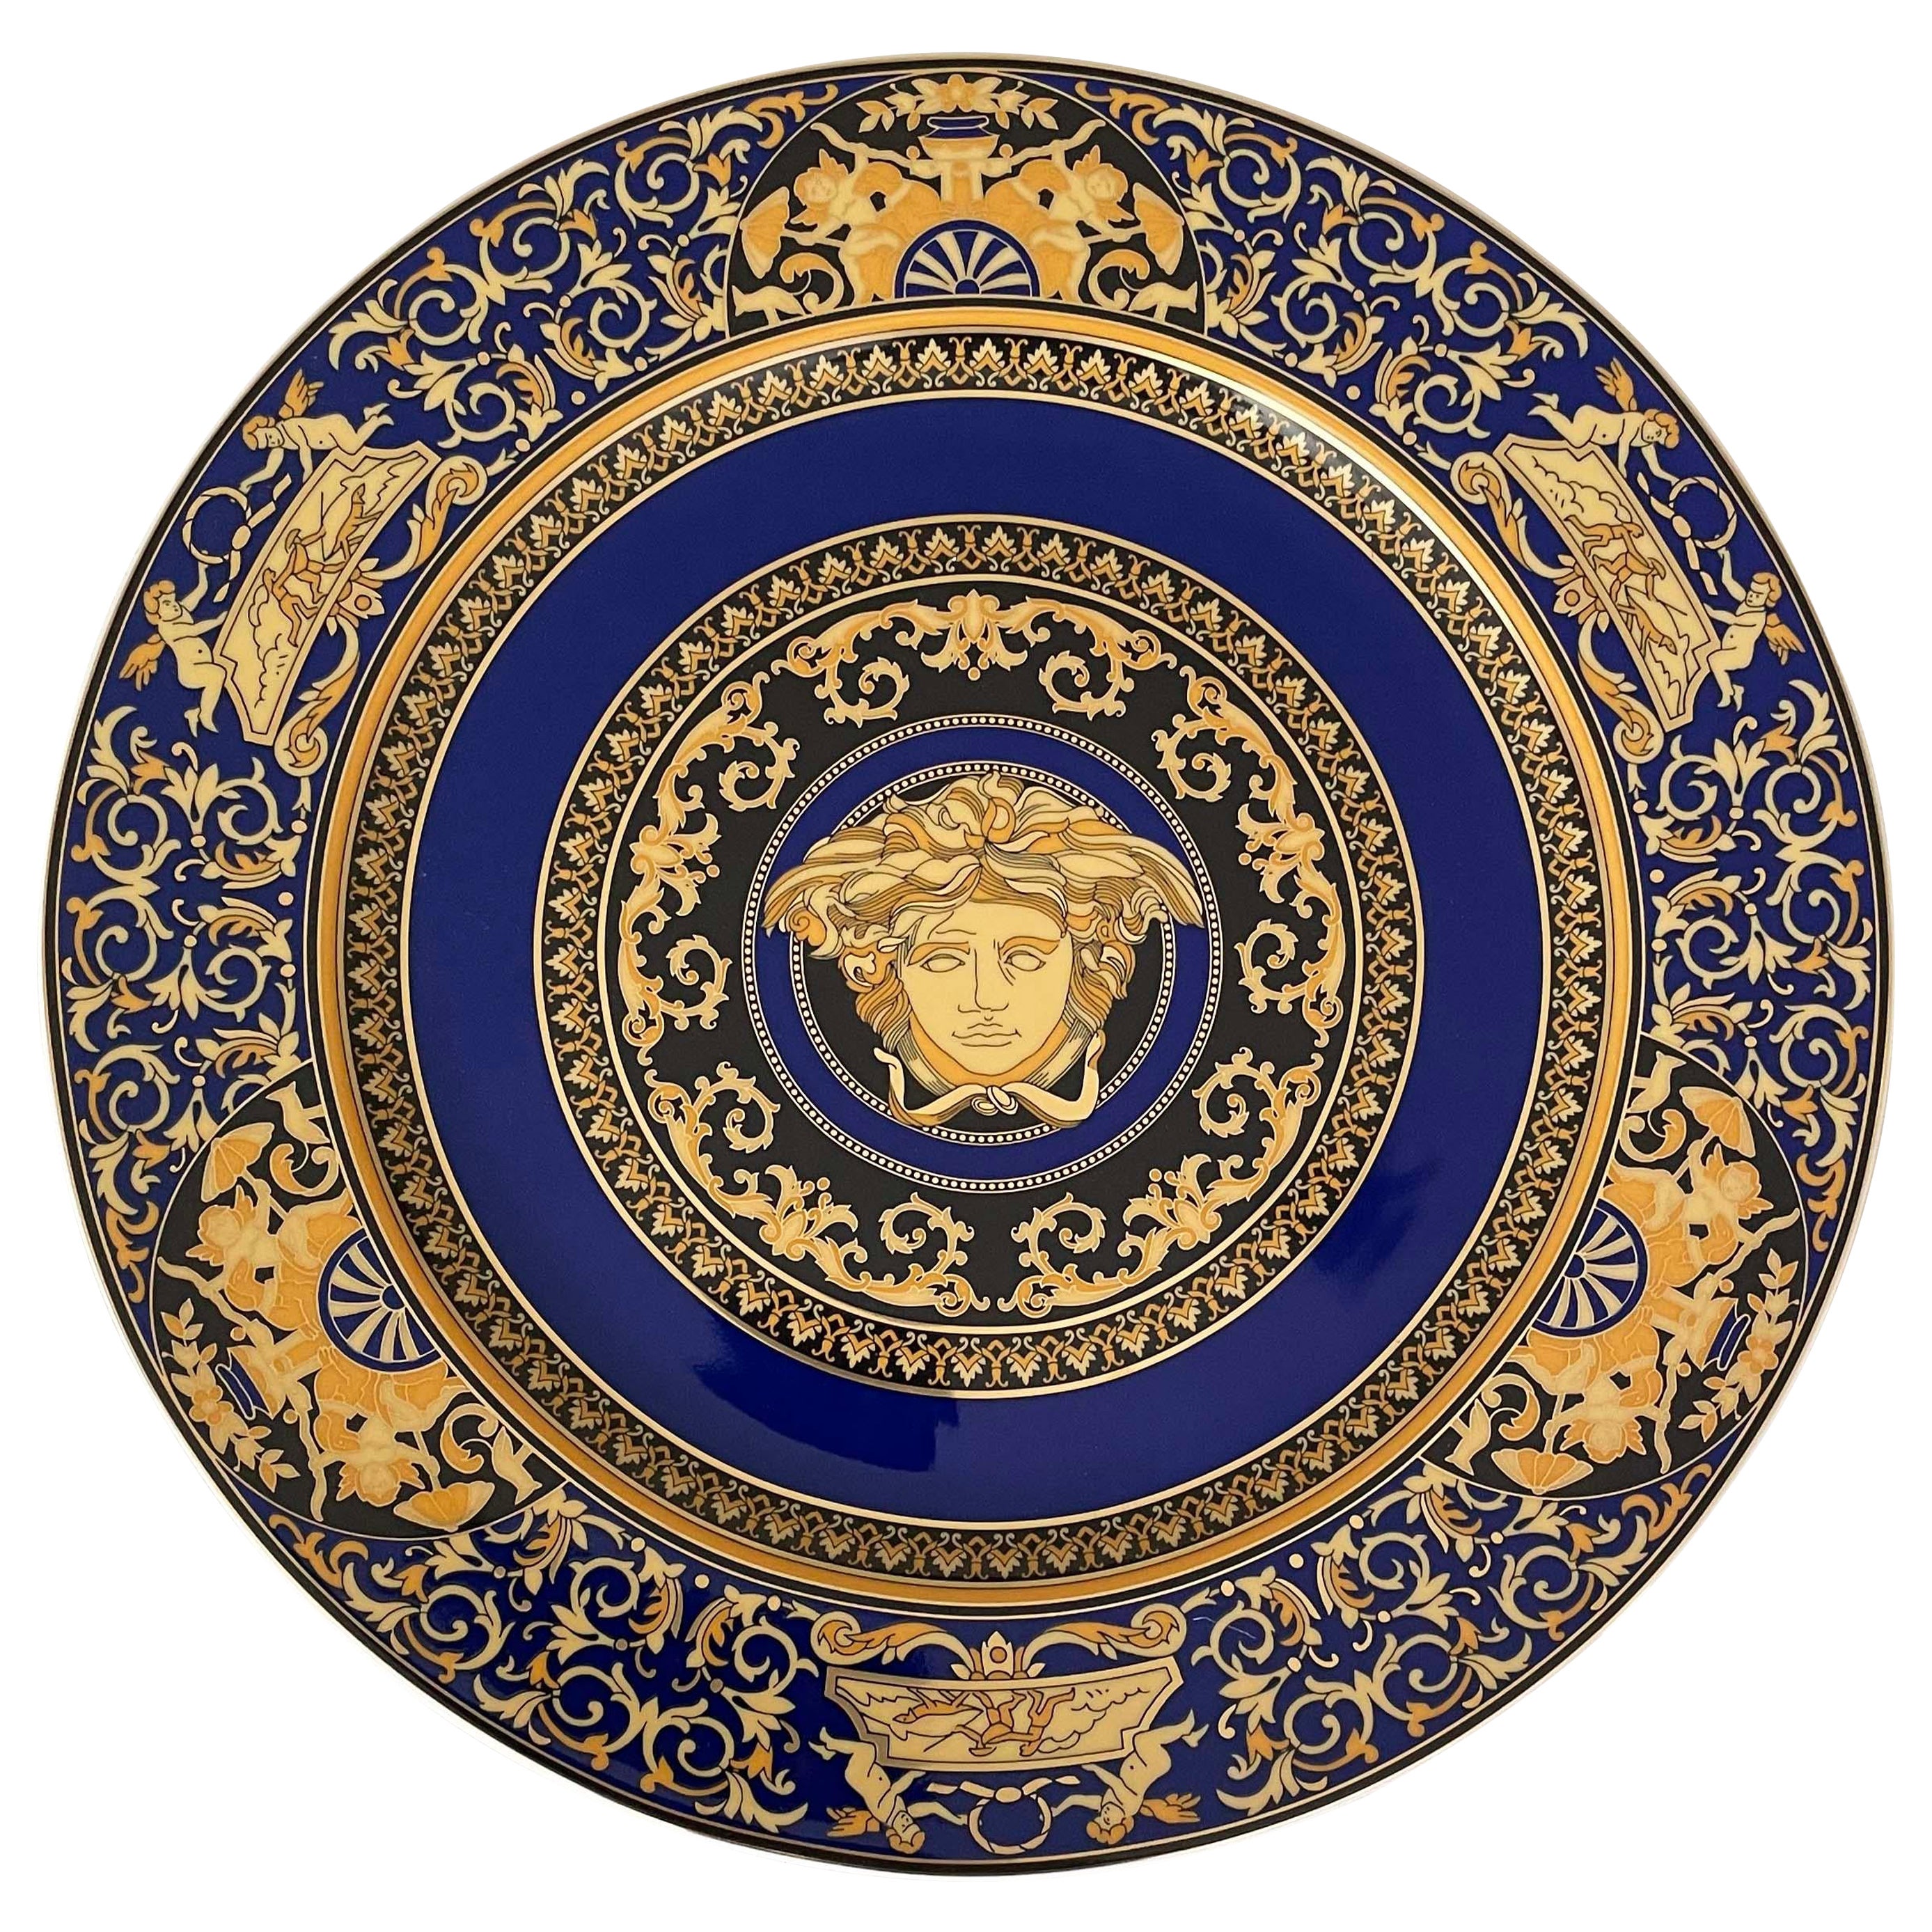  Versace Porcelain Medusa Display Plate By Rosenthal, 20th Century